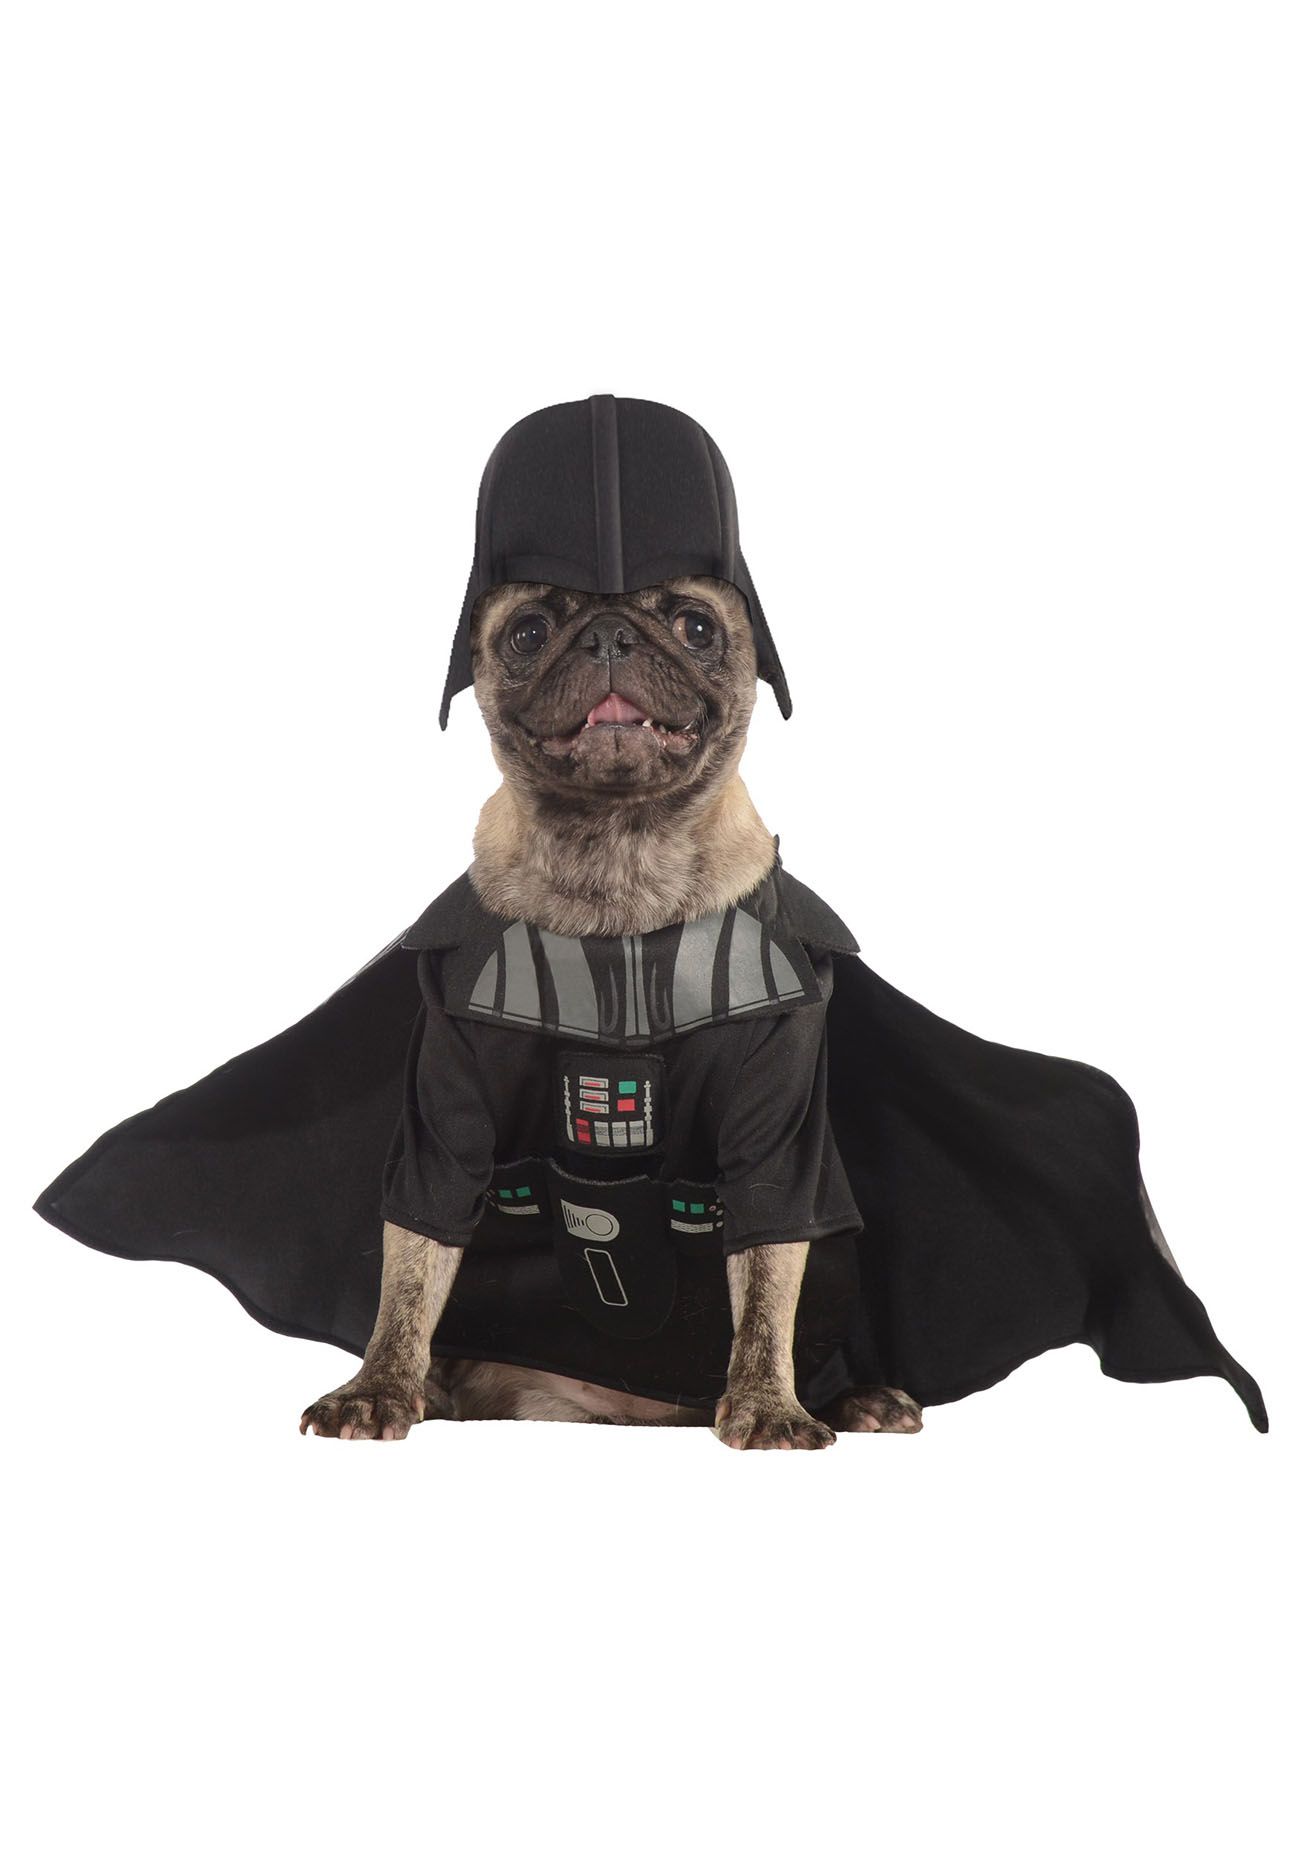 Darth Vader Pug in Star Wars dog Halloween costume